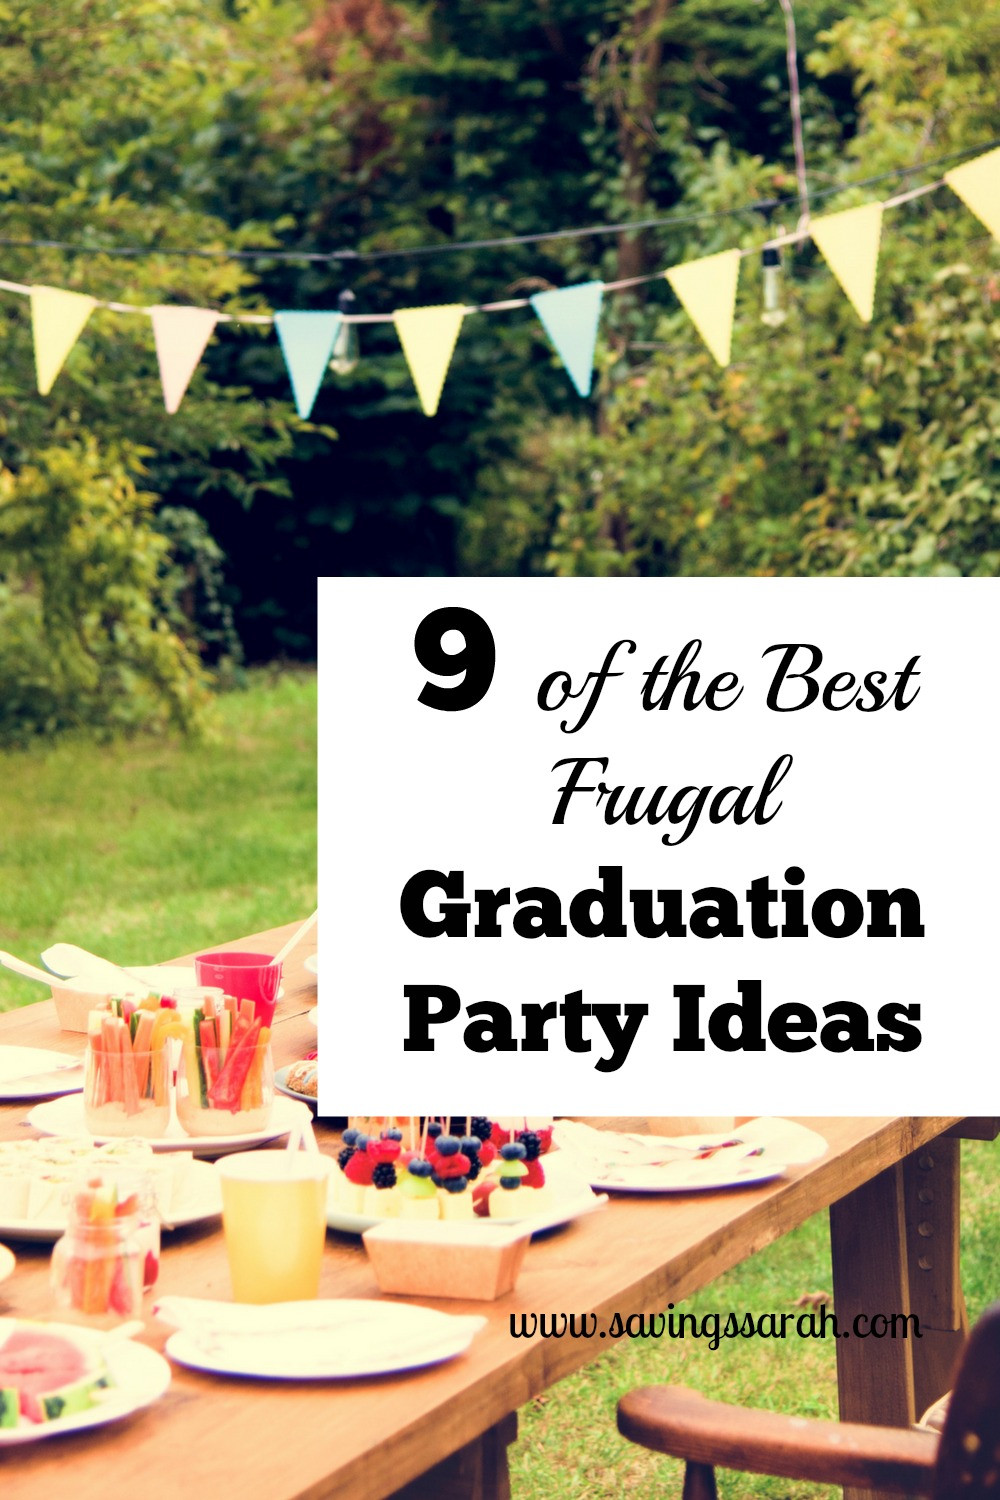 College Graduation Party Ideas Pinterest
 9 the Best Frugal Graduation Party Ideas Earning and